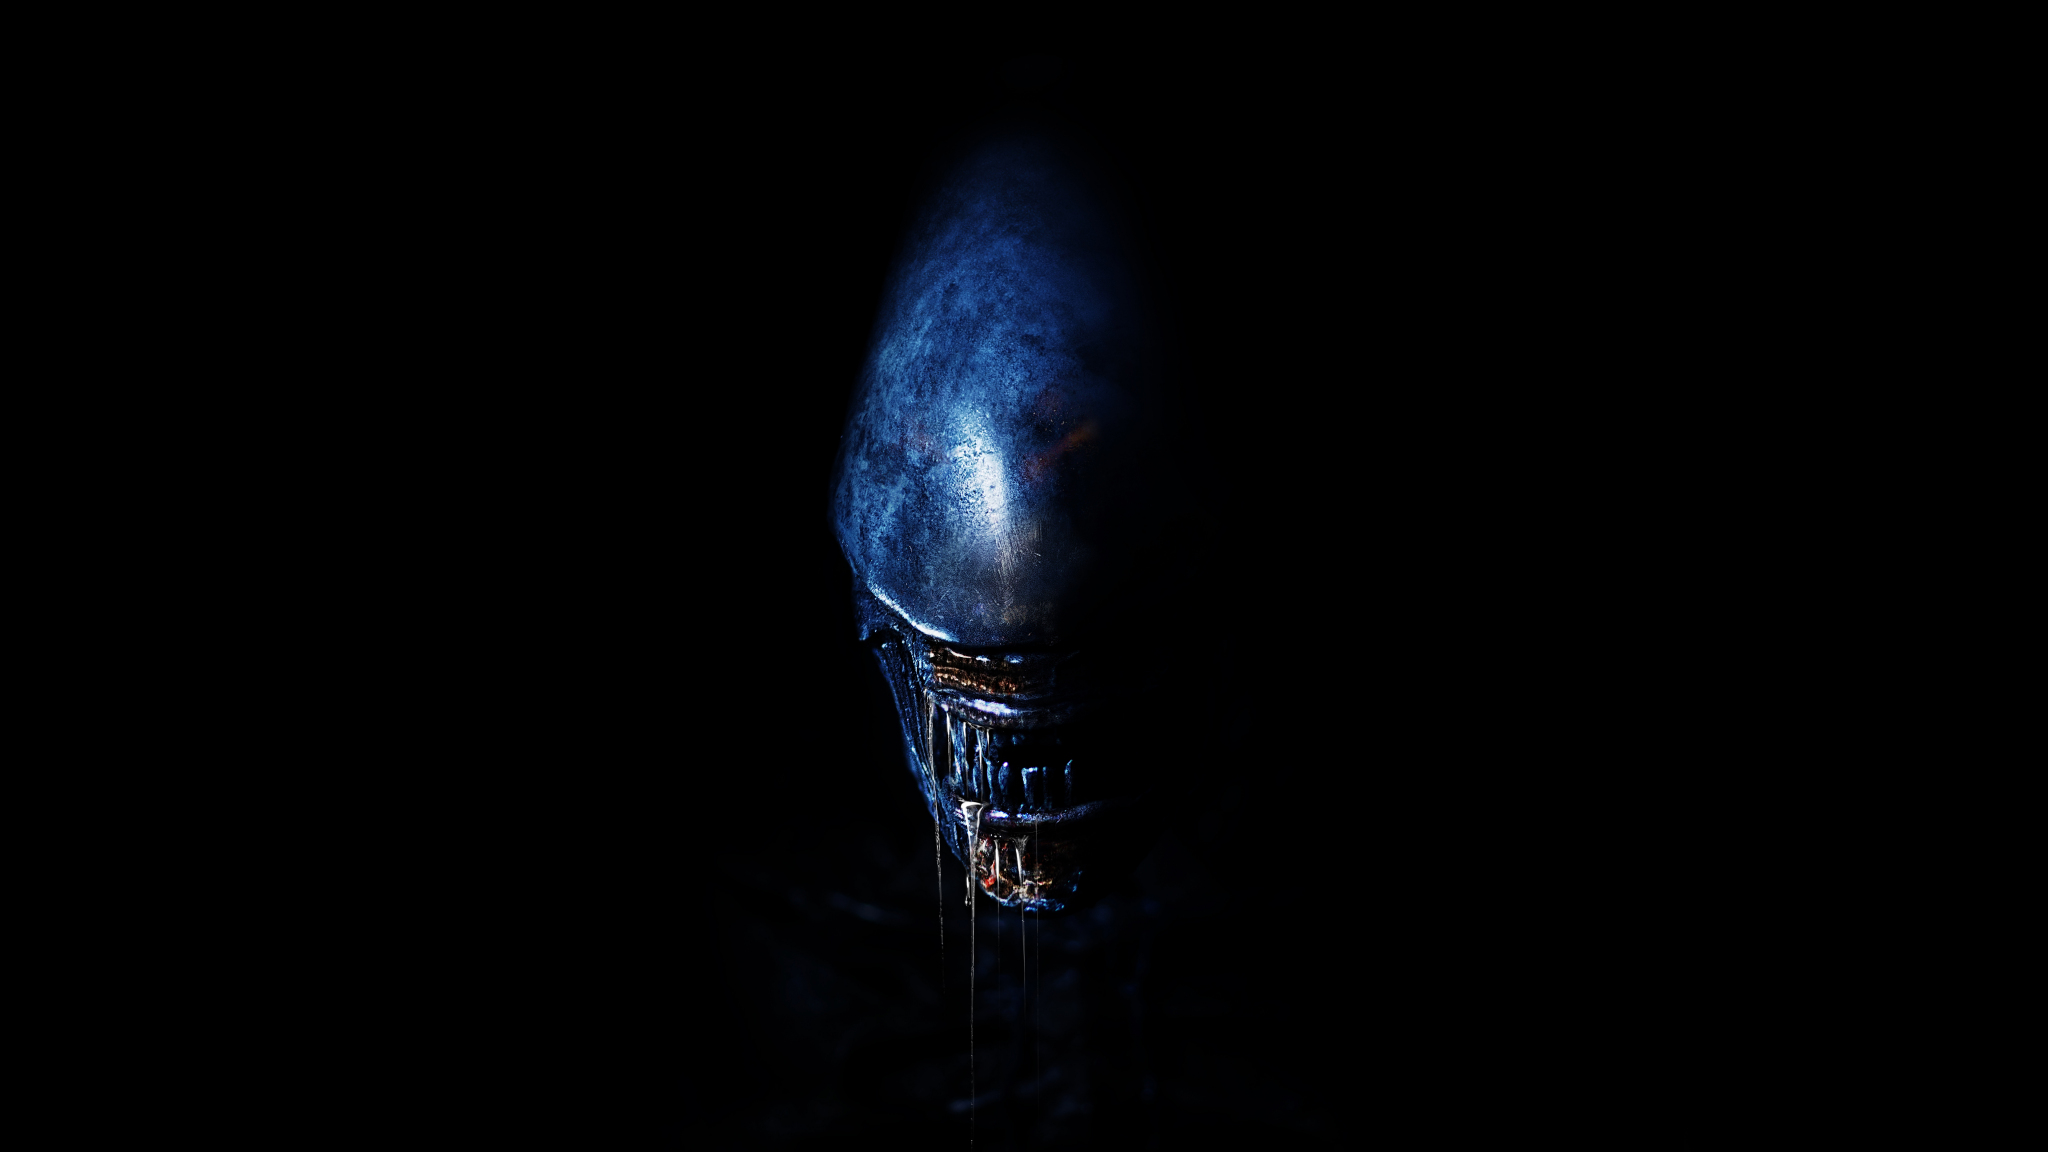 Desktop Wallpaper Alien Covenant Creature Dark 4k 8k Hd Image